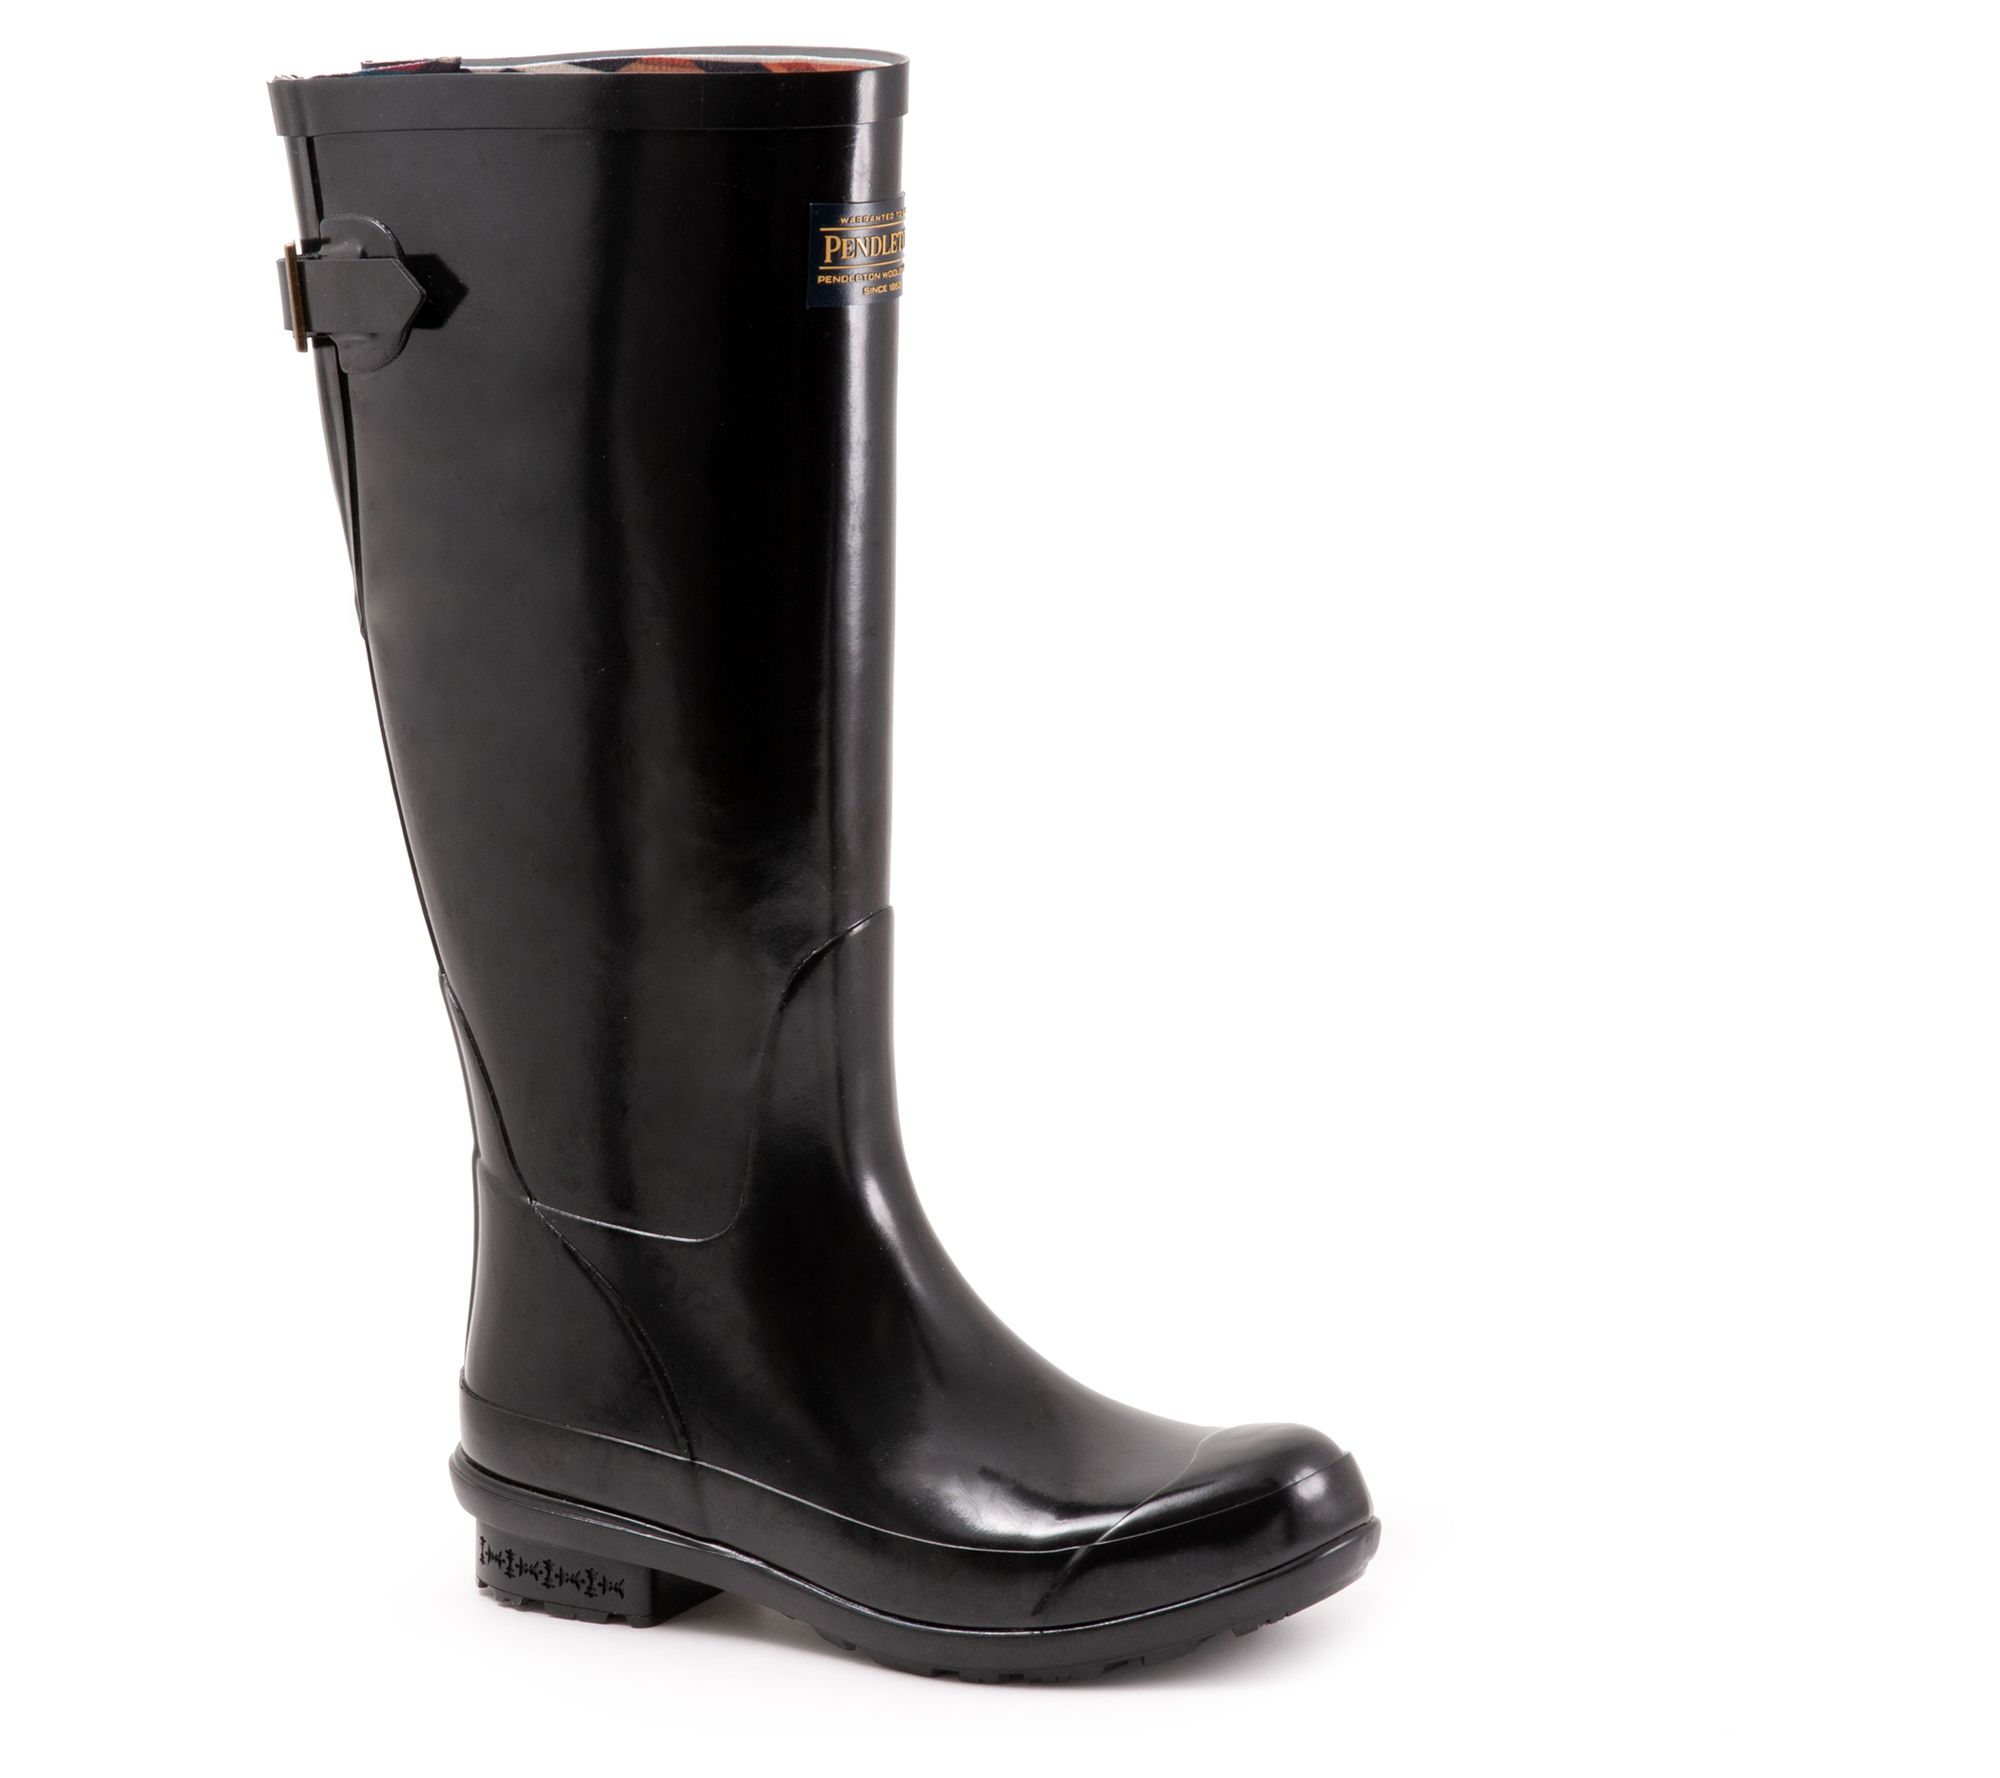 Pendleton Women's Tall Rain Boots - Gloss - QVC.com